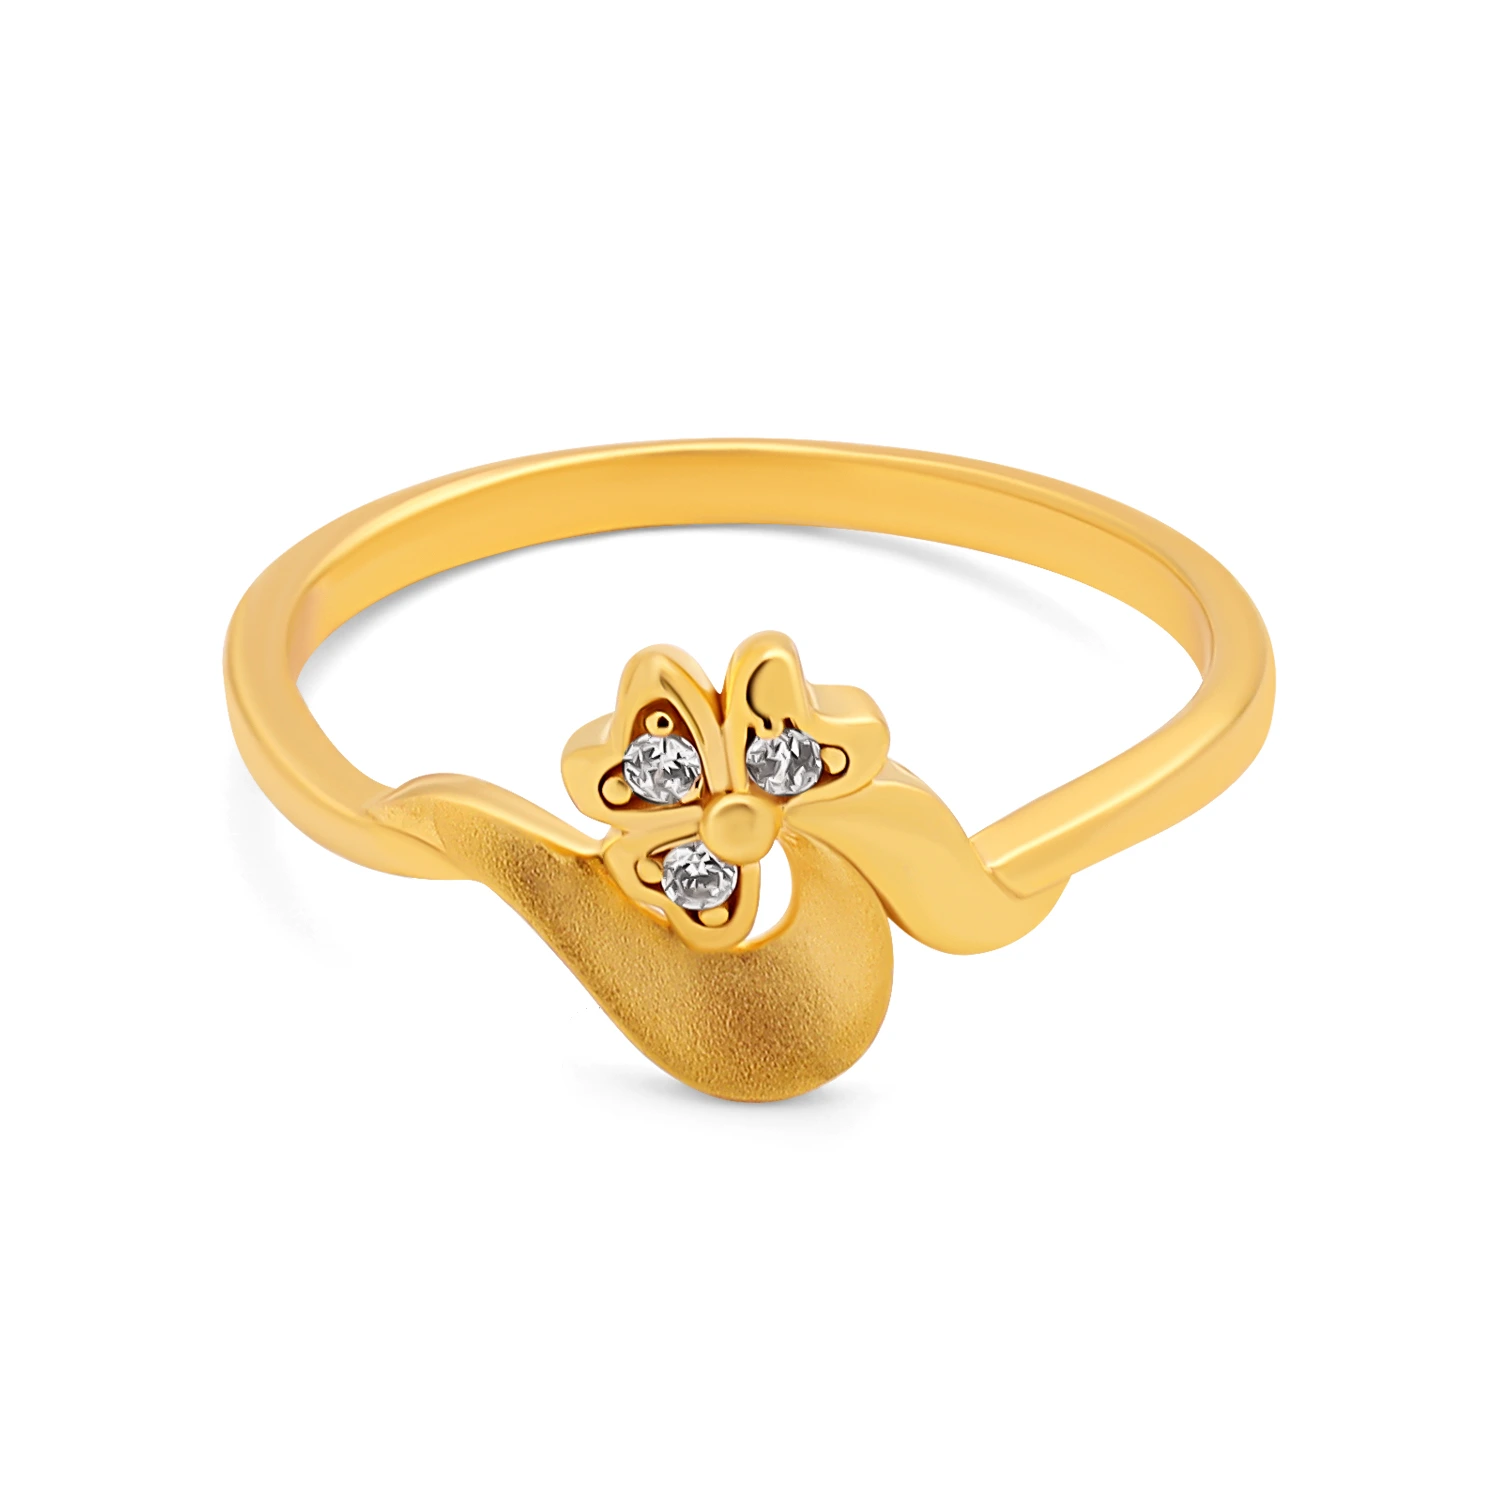 gold ring designs for ladies | 4 gram rings design | anguhti design | dubai  jewelry collection | Gold ring designs, Ring designs, Jewelry collection